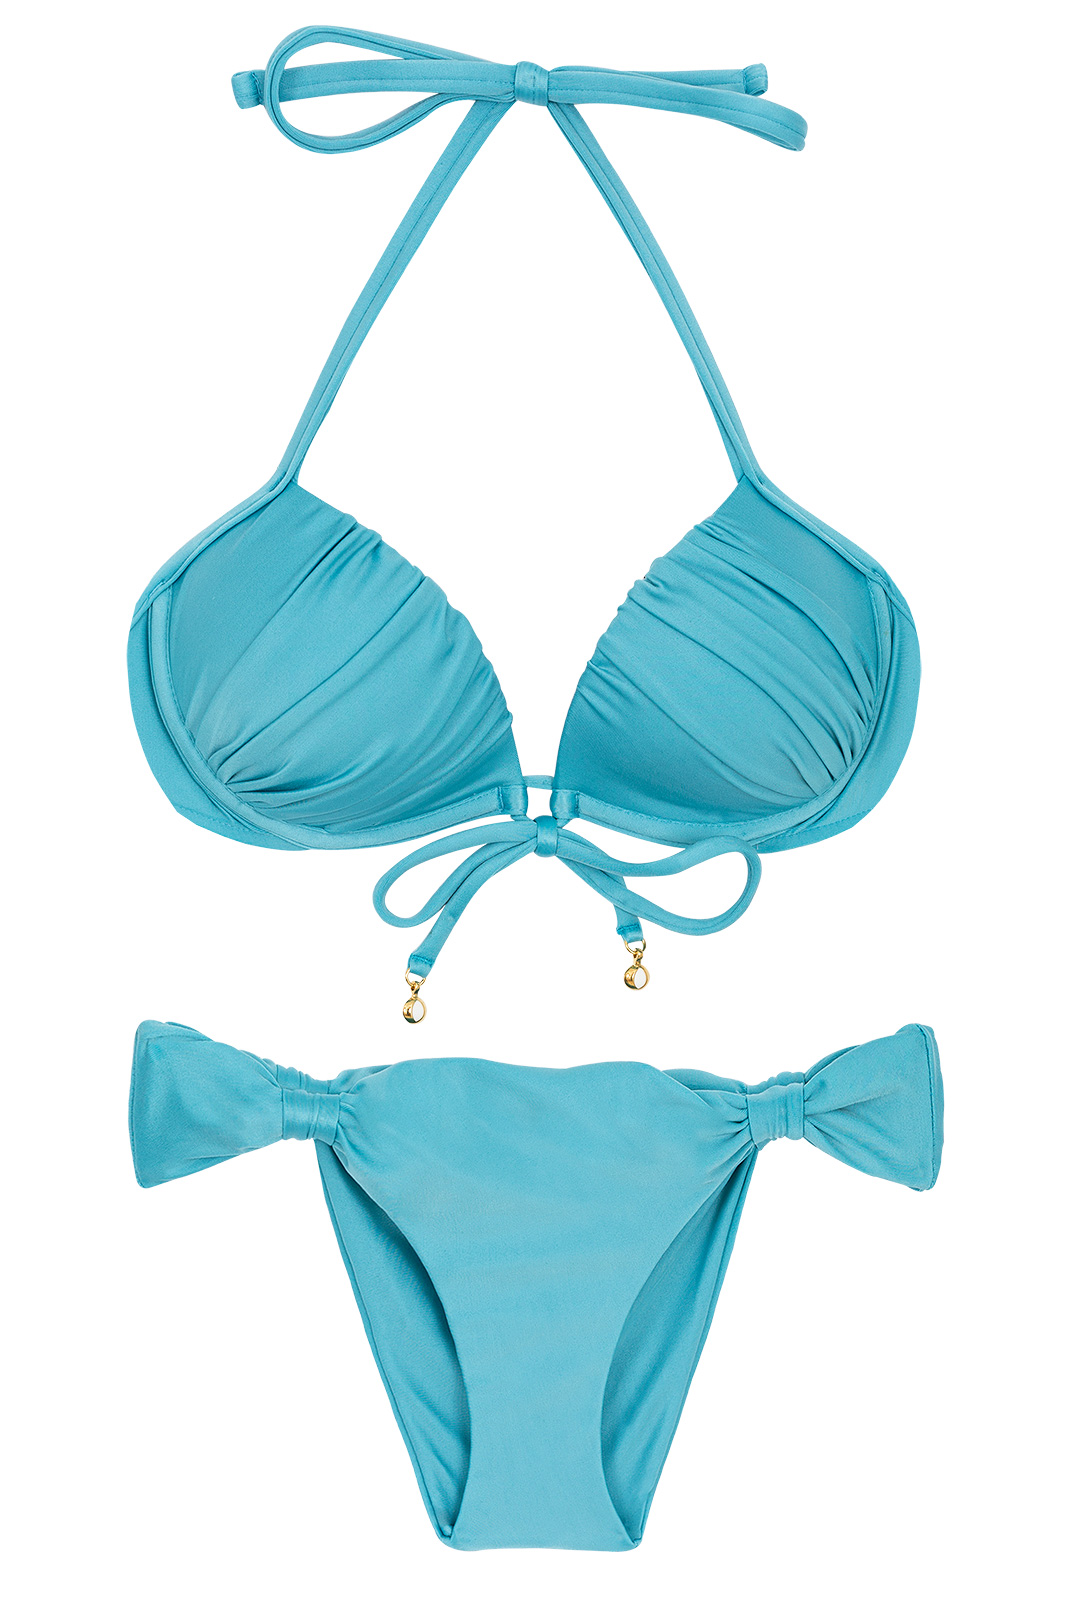 Sky Blue Balconette Bikini With Sliding Rings Orvalho Balconet Rio